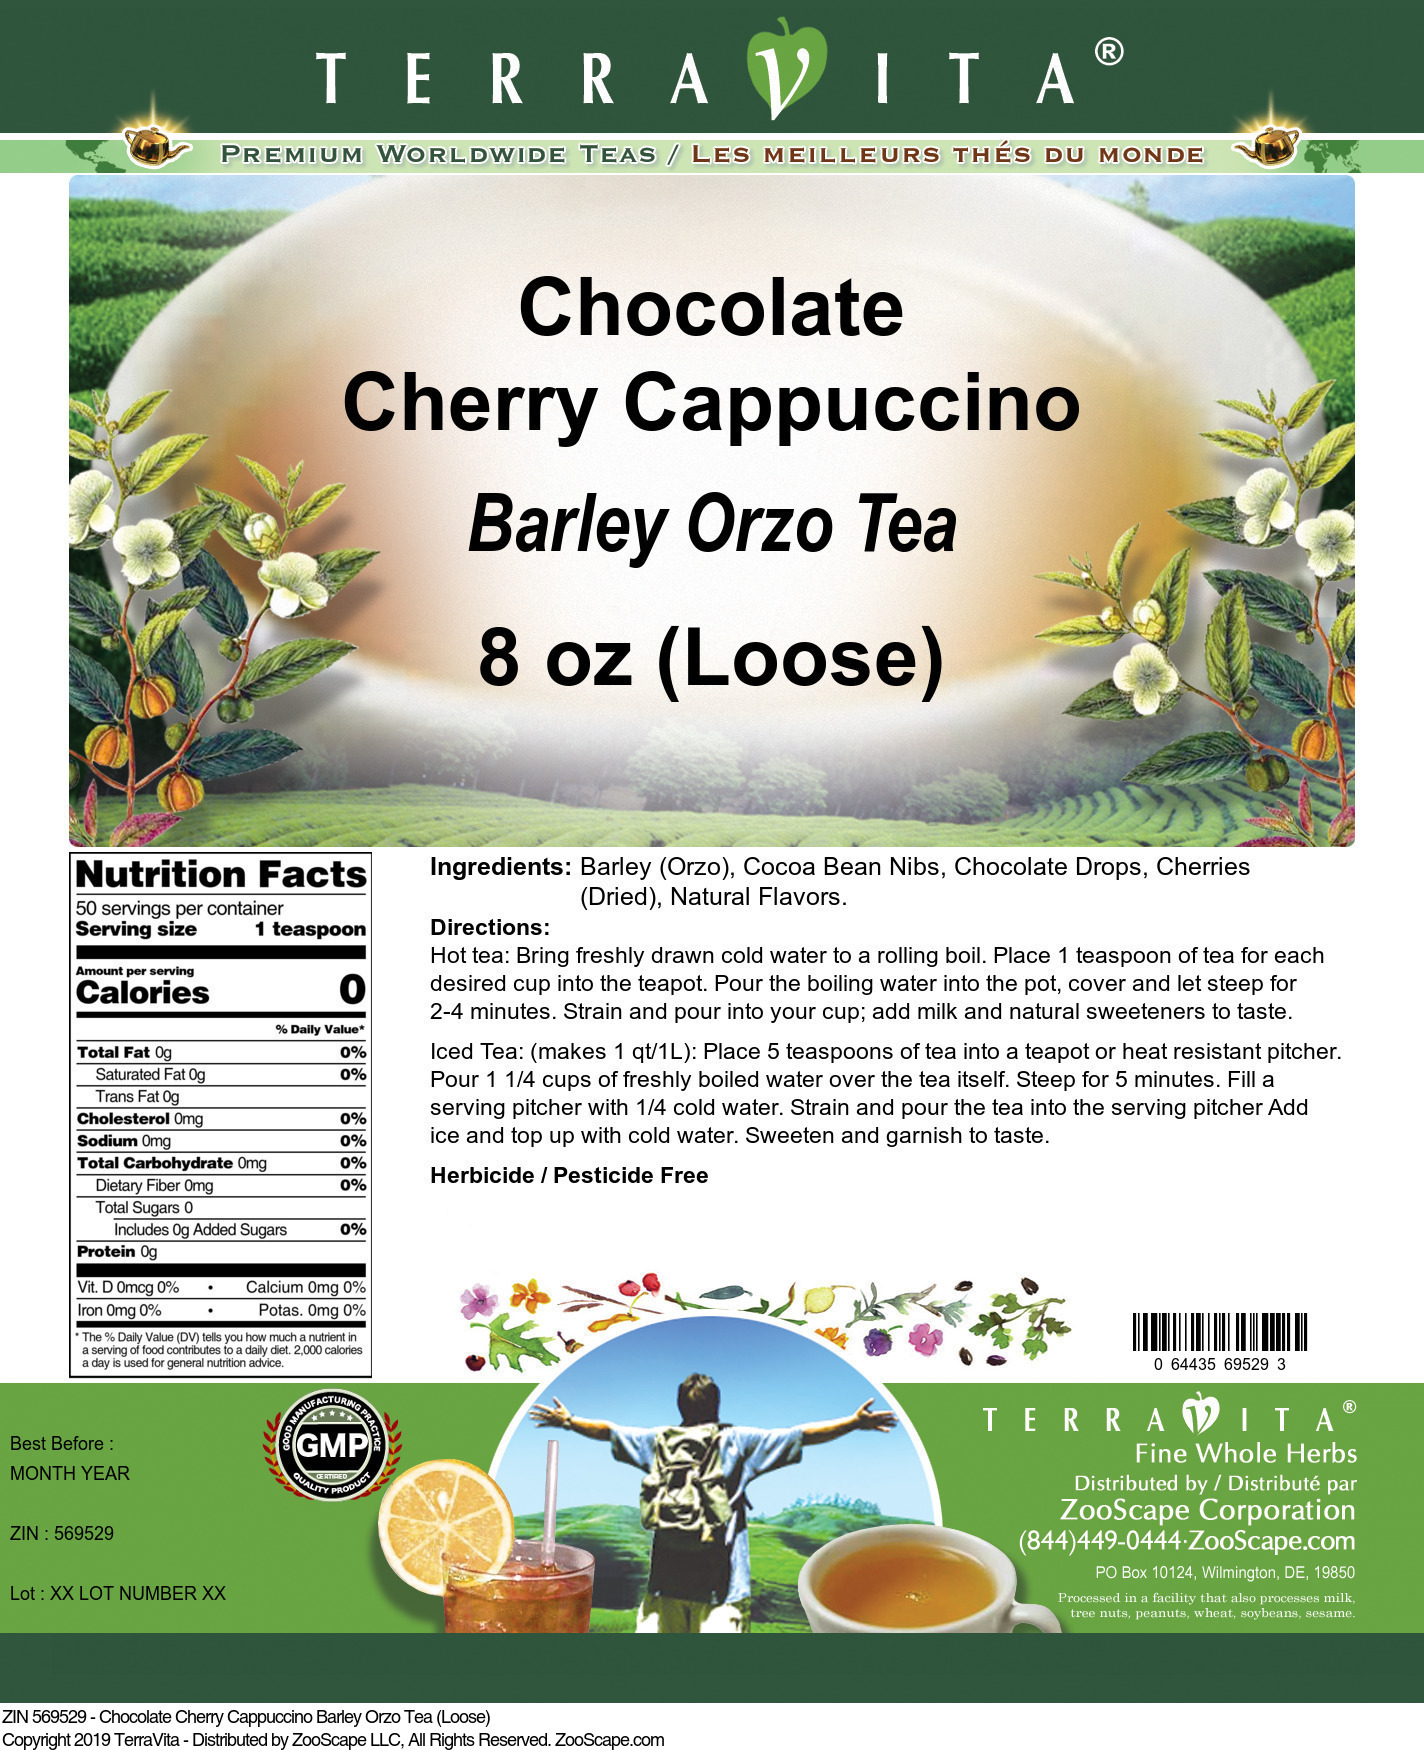 Chocolate Cherry Cappuccino Barley Orzo Tea (Loose) - Label